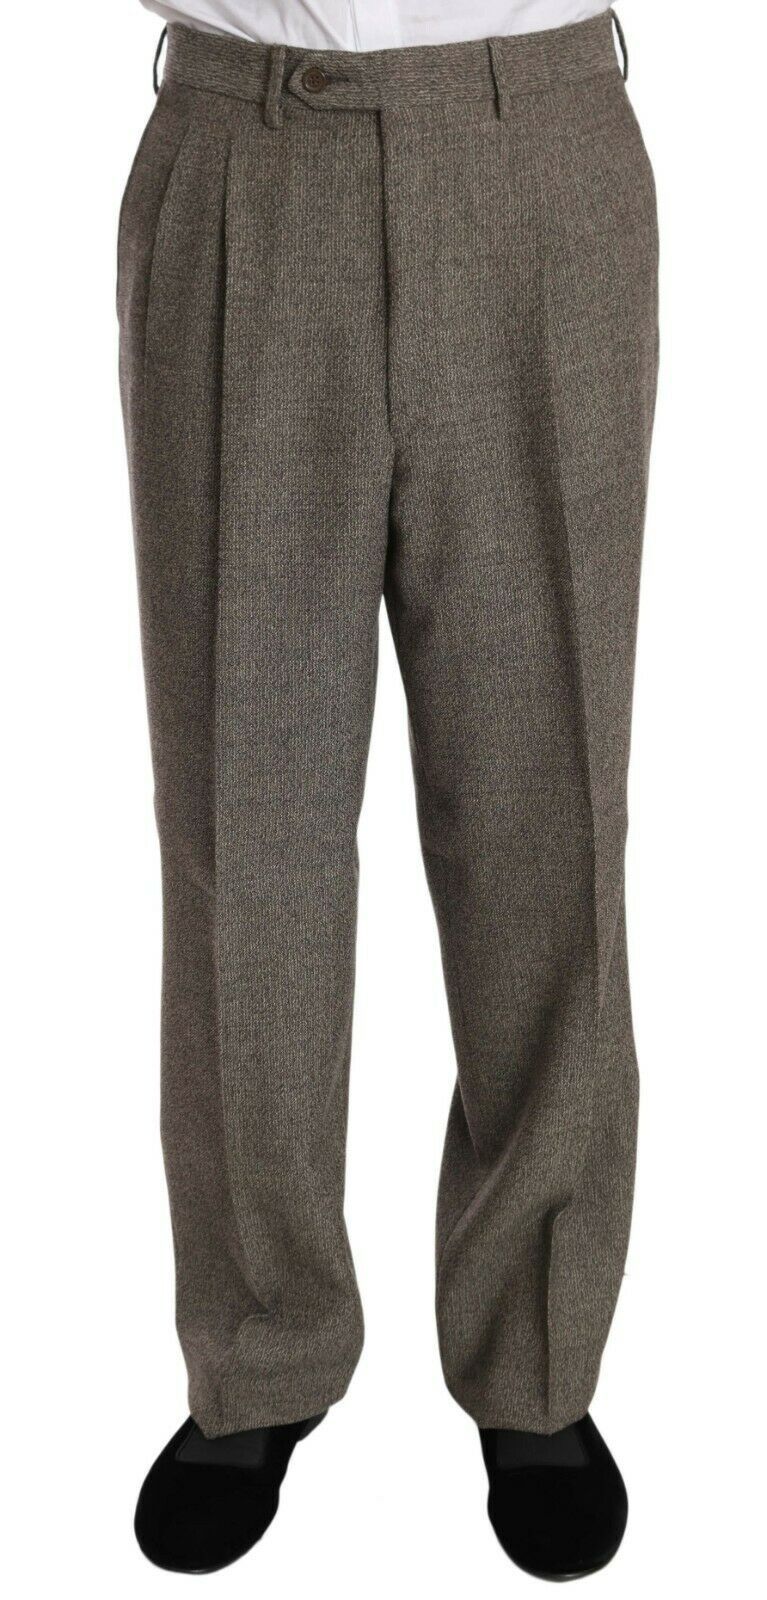 Elegant Light Brown Wool Men's Suit